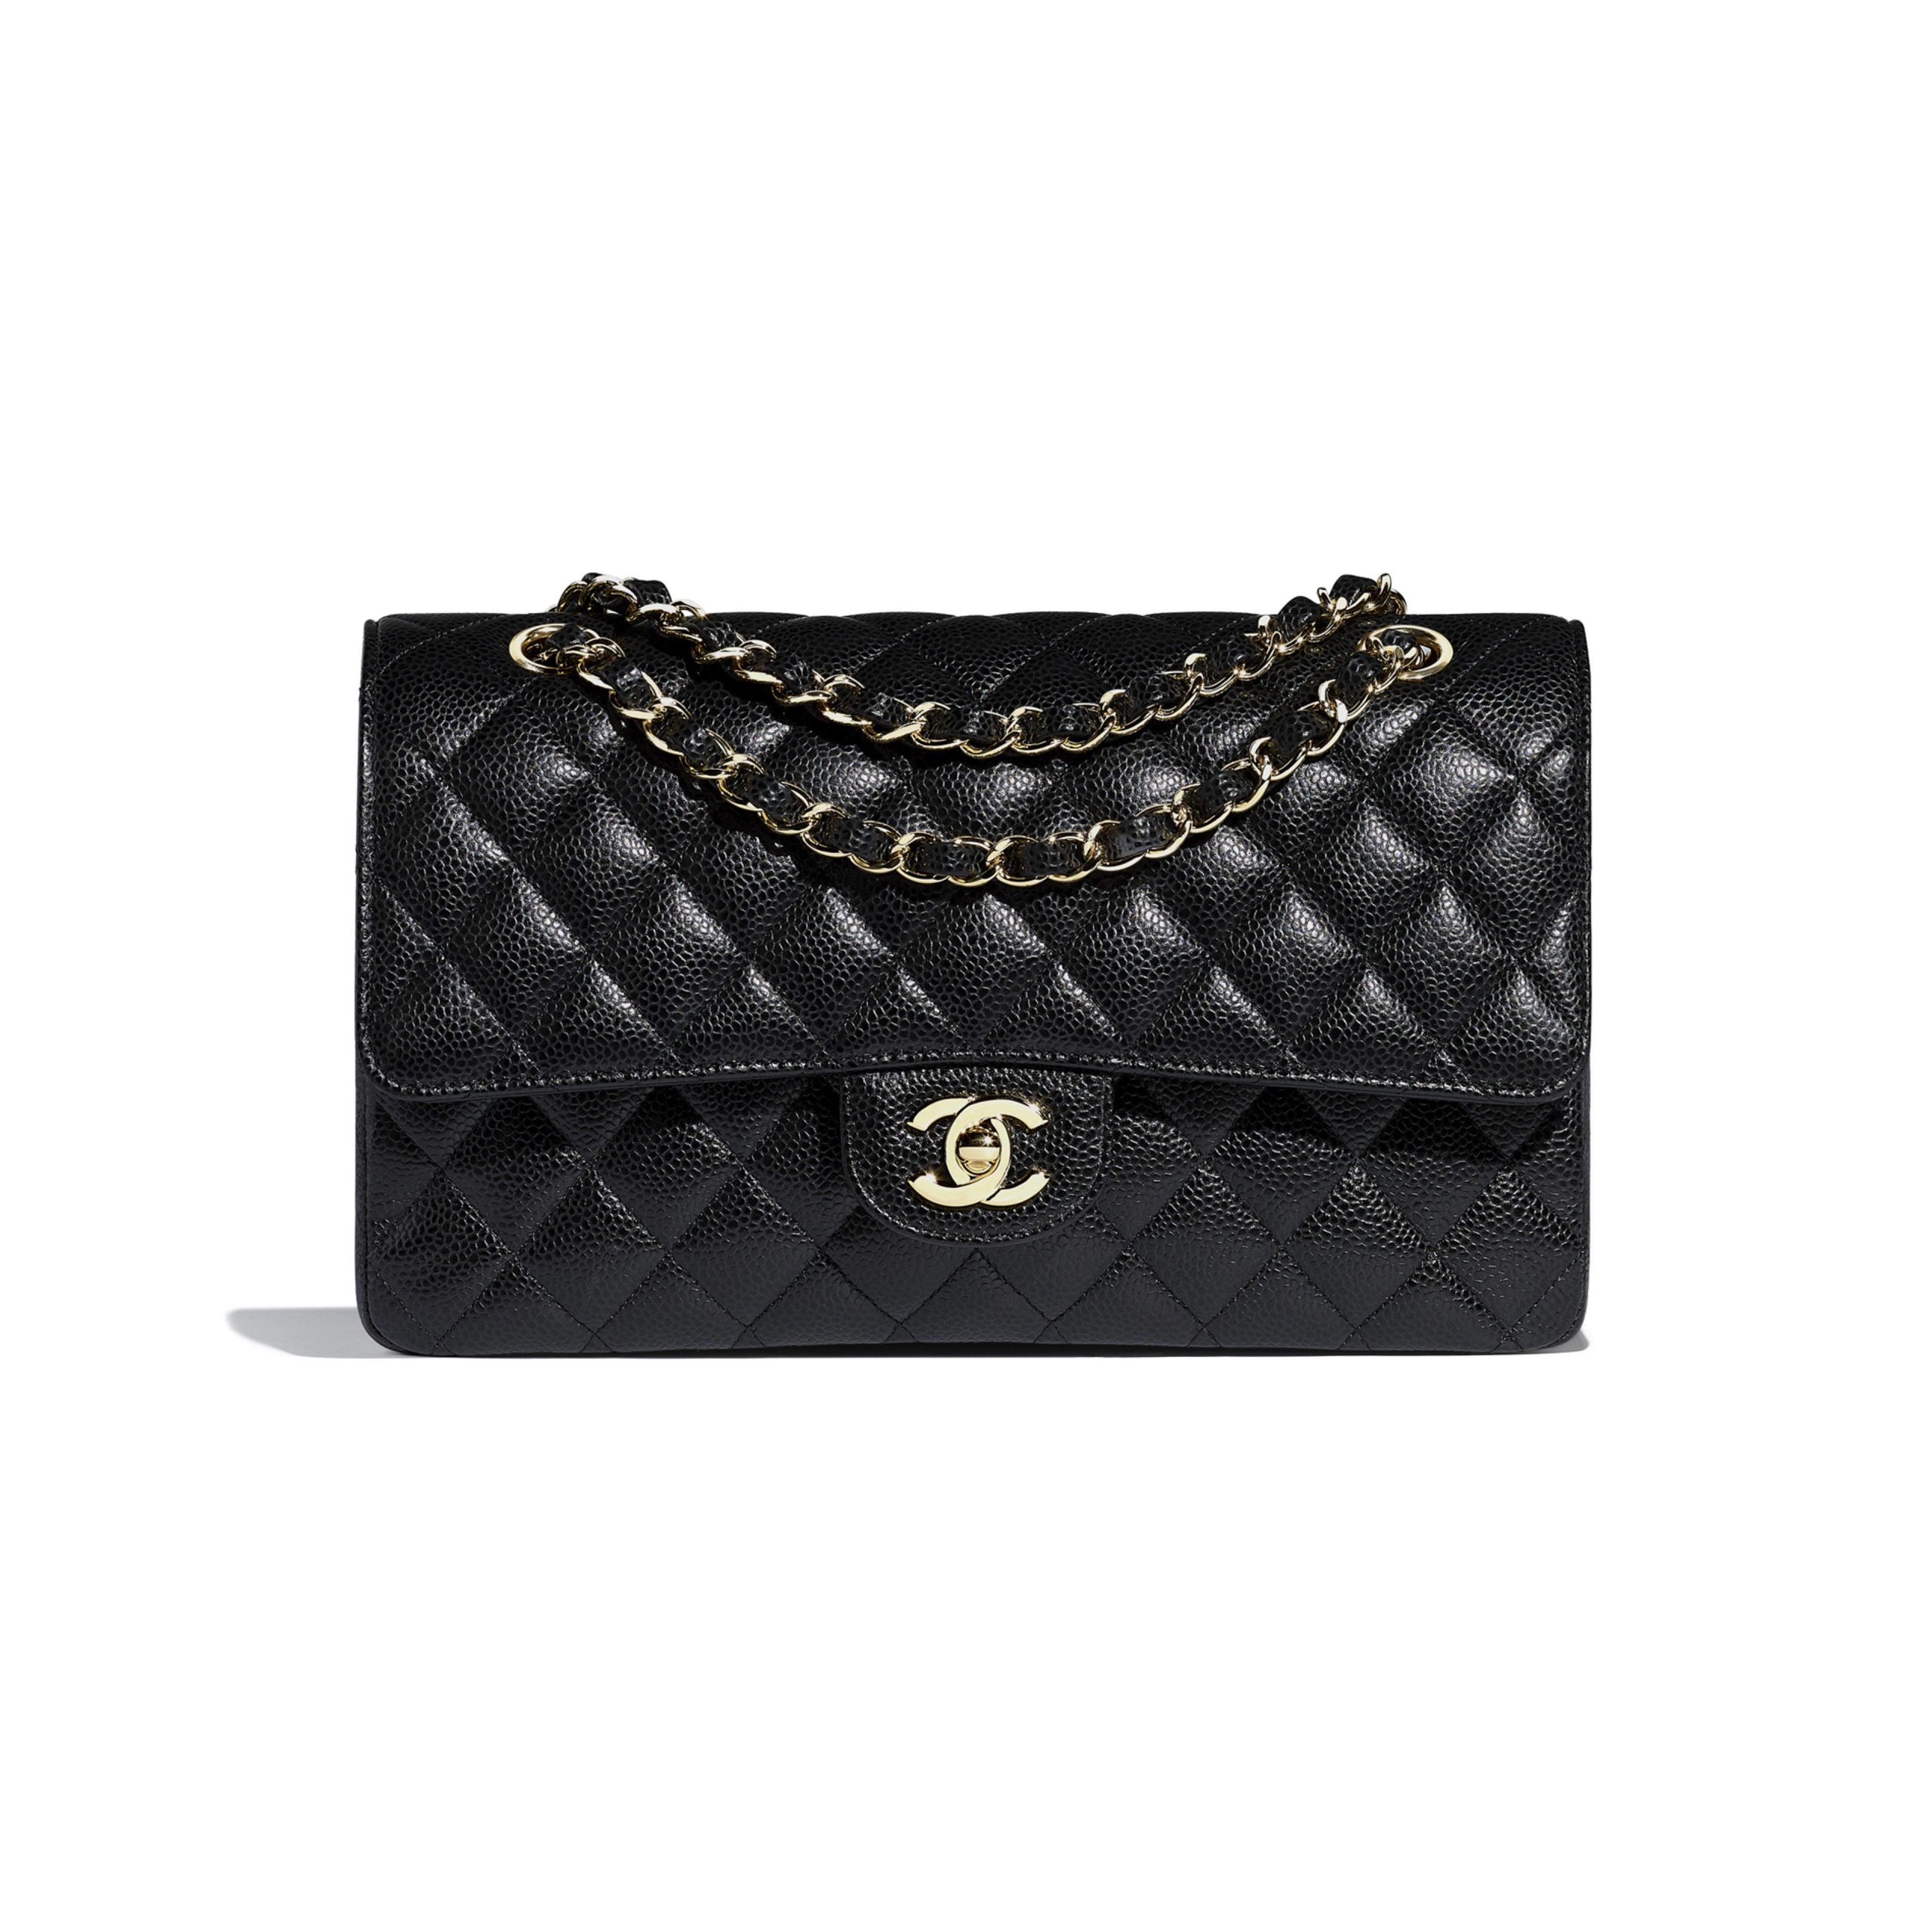 The Chanel Classic Handbag